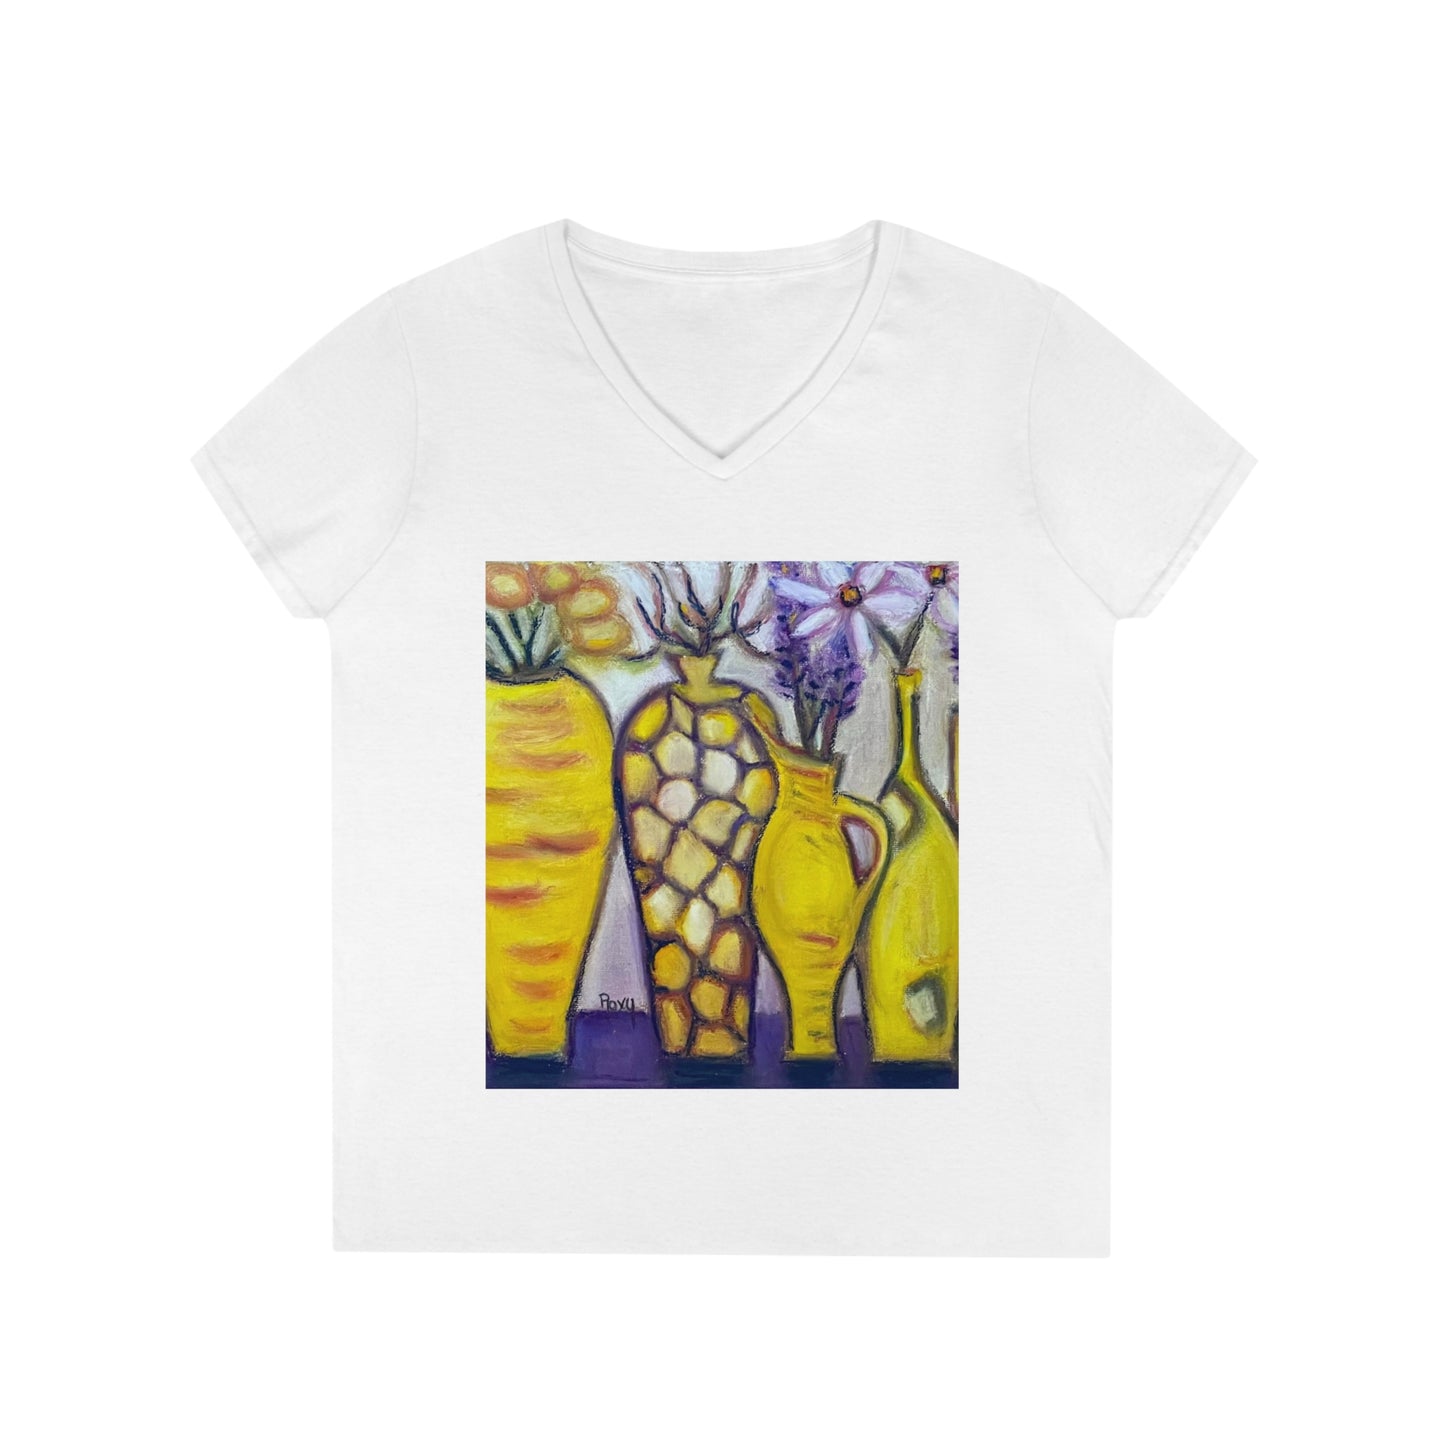 Yellow Vases Ladies' V-Neck T-Shirt